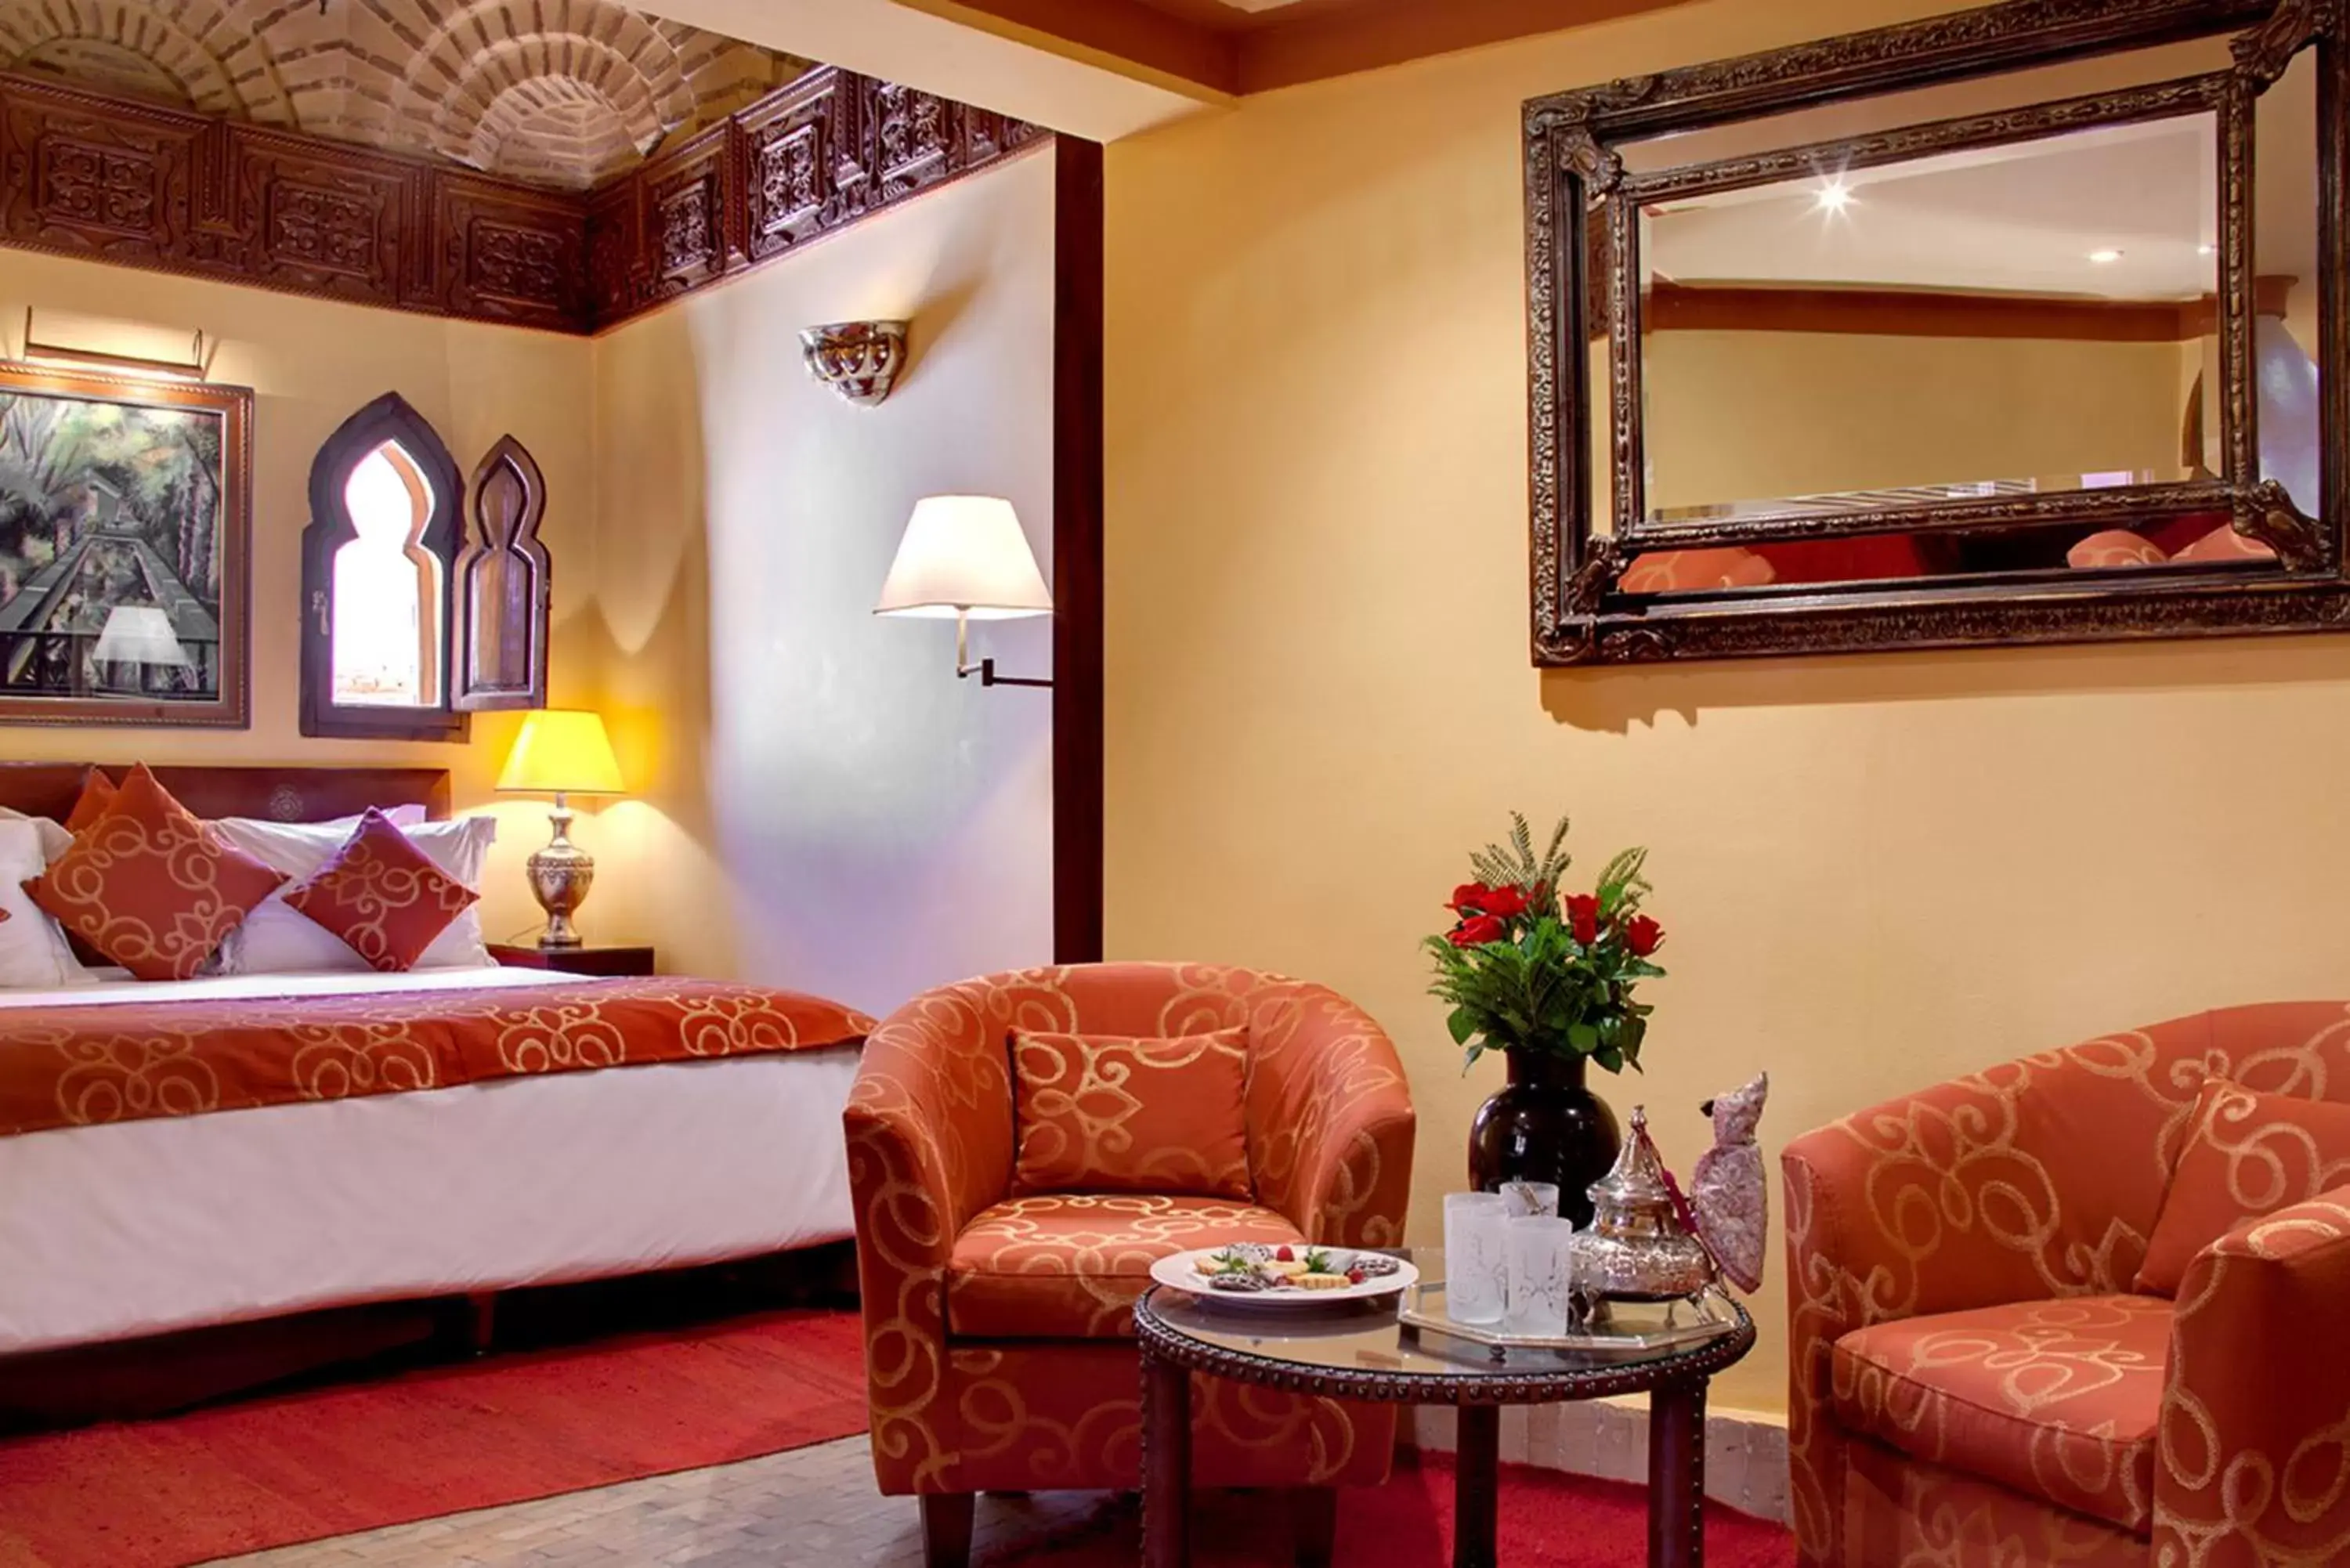 Bed in La Maison Arabe Hotel, Spa & Cooking Workshops